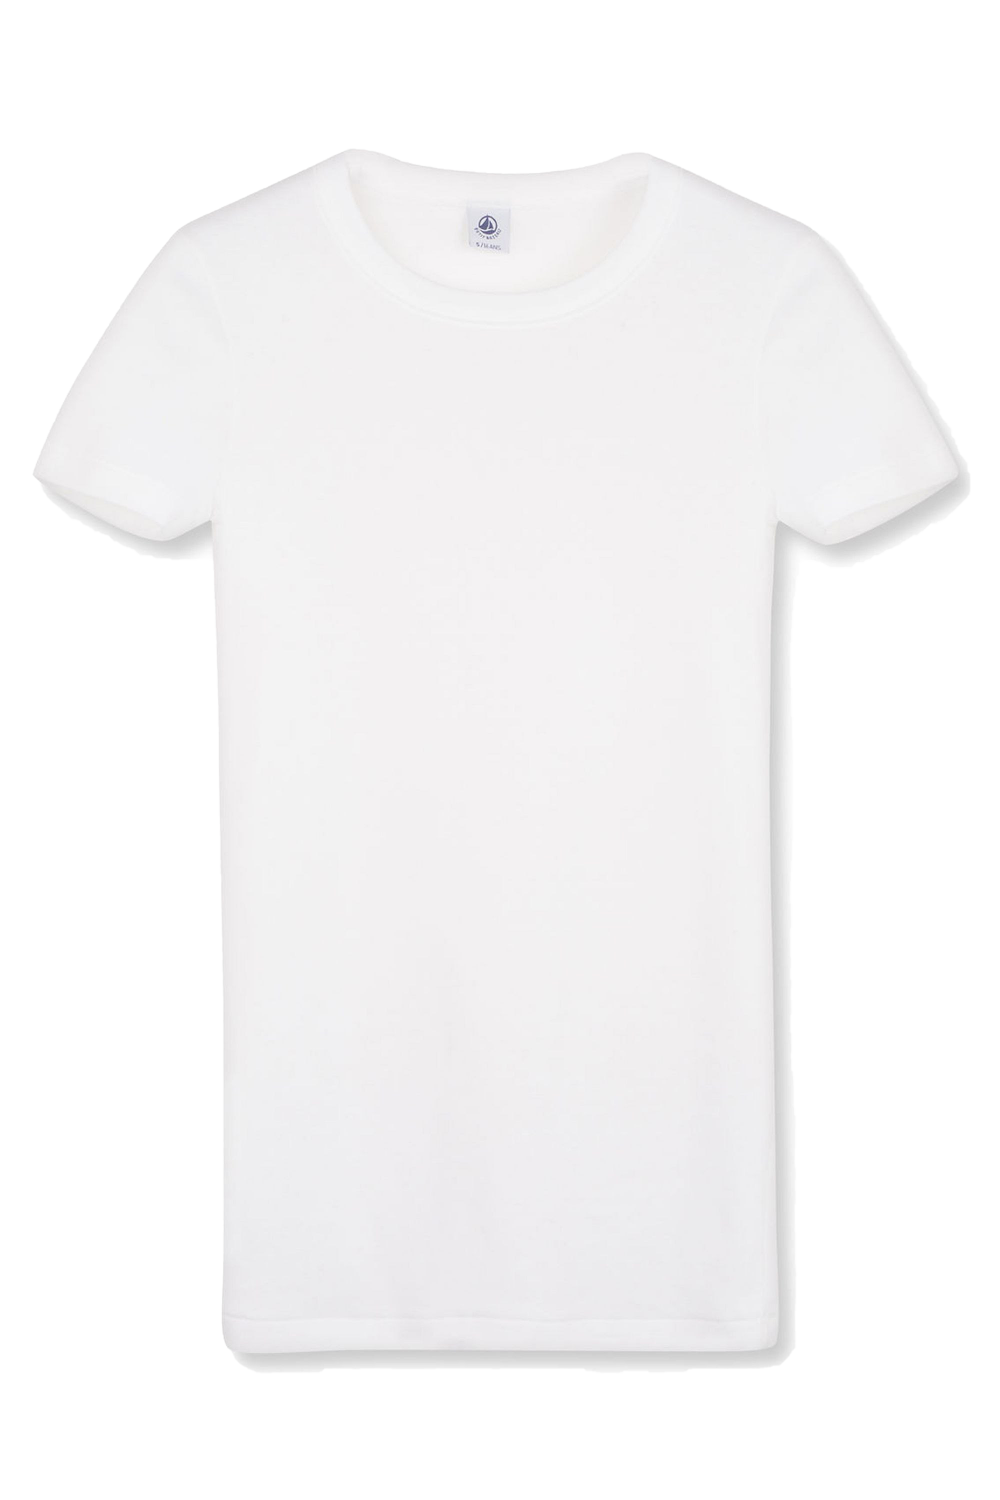 Shirt Blank Template - Imgflip